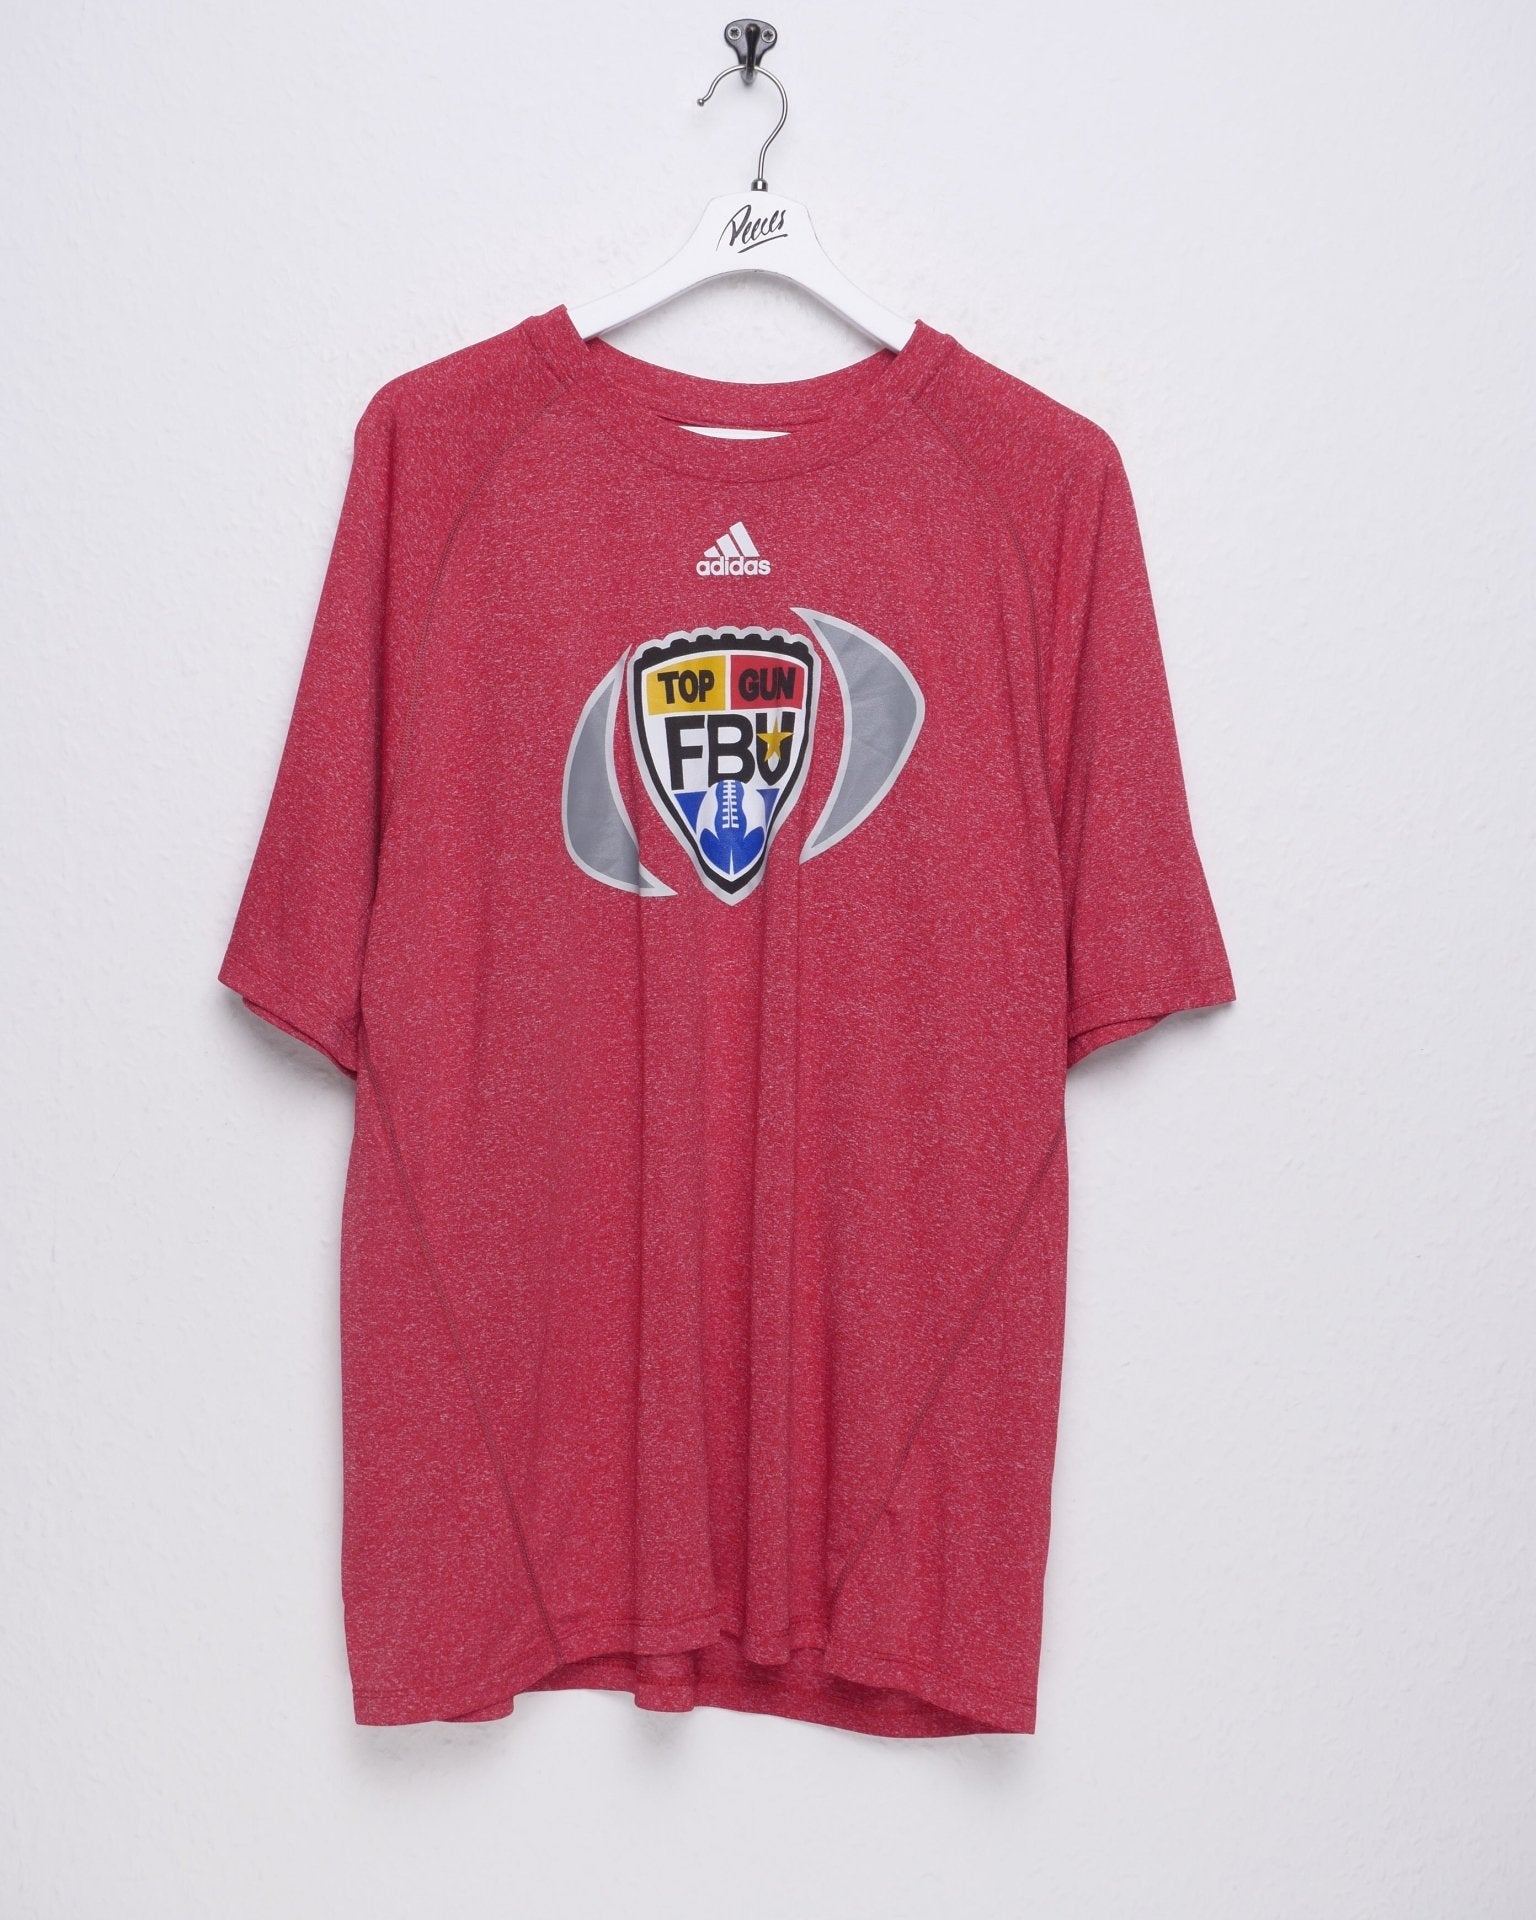 Adidas Top Gun FBU Football printed Middle Logo red Jersey Shirt - Peeces